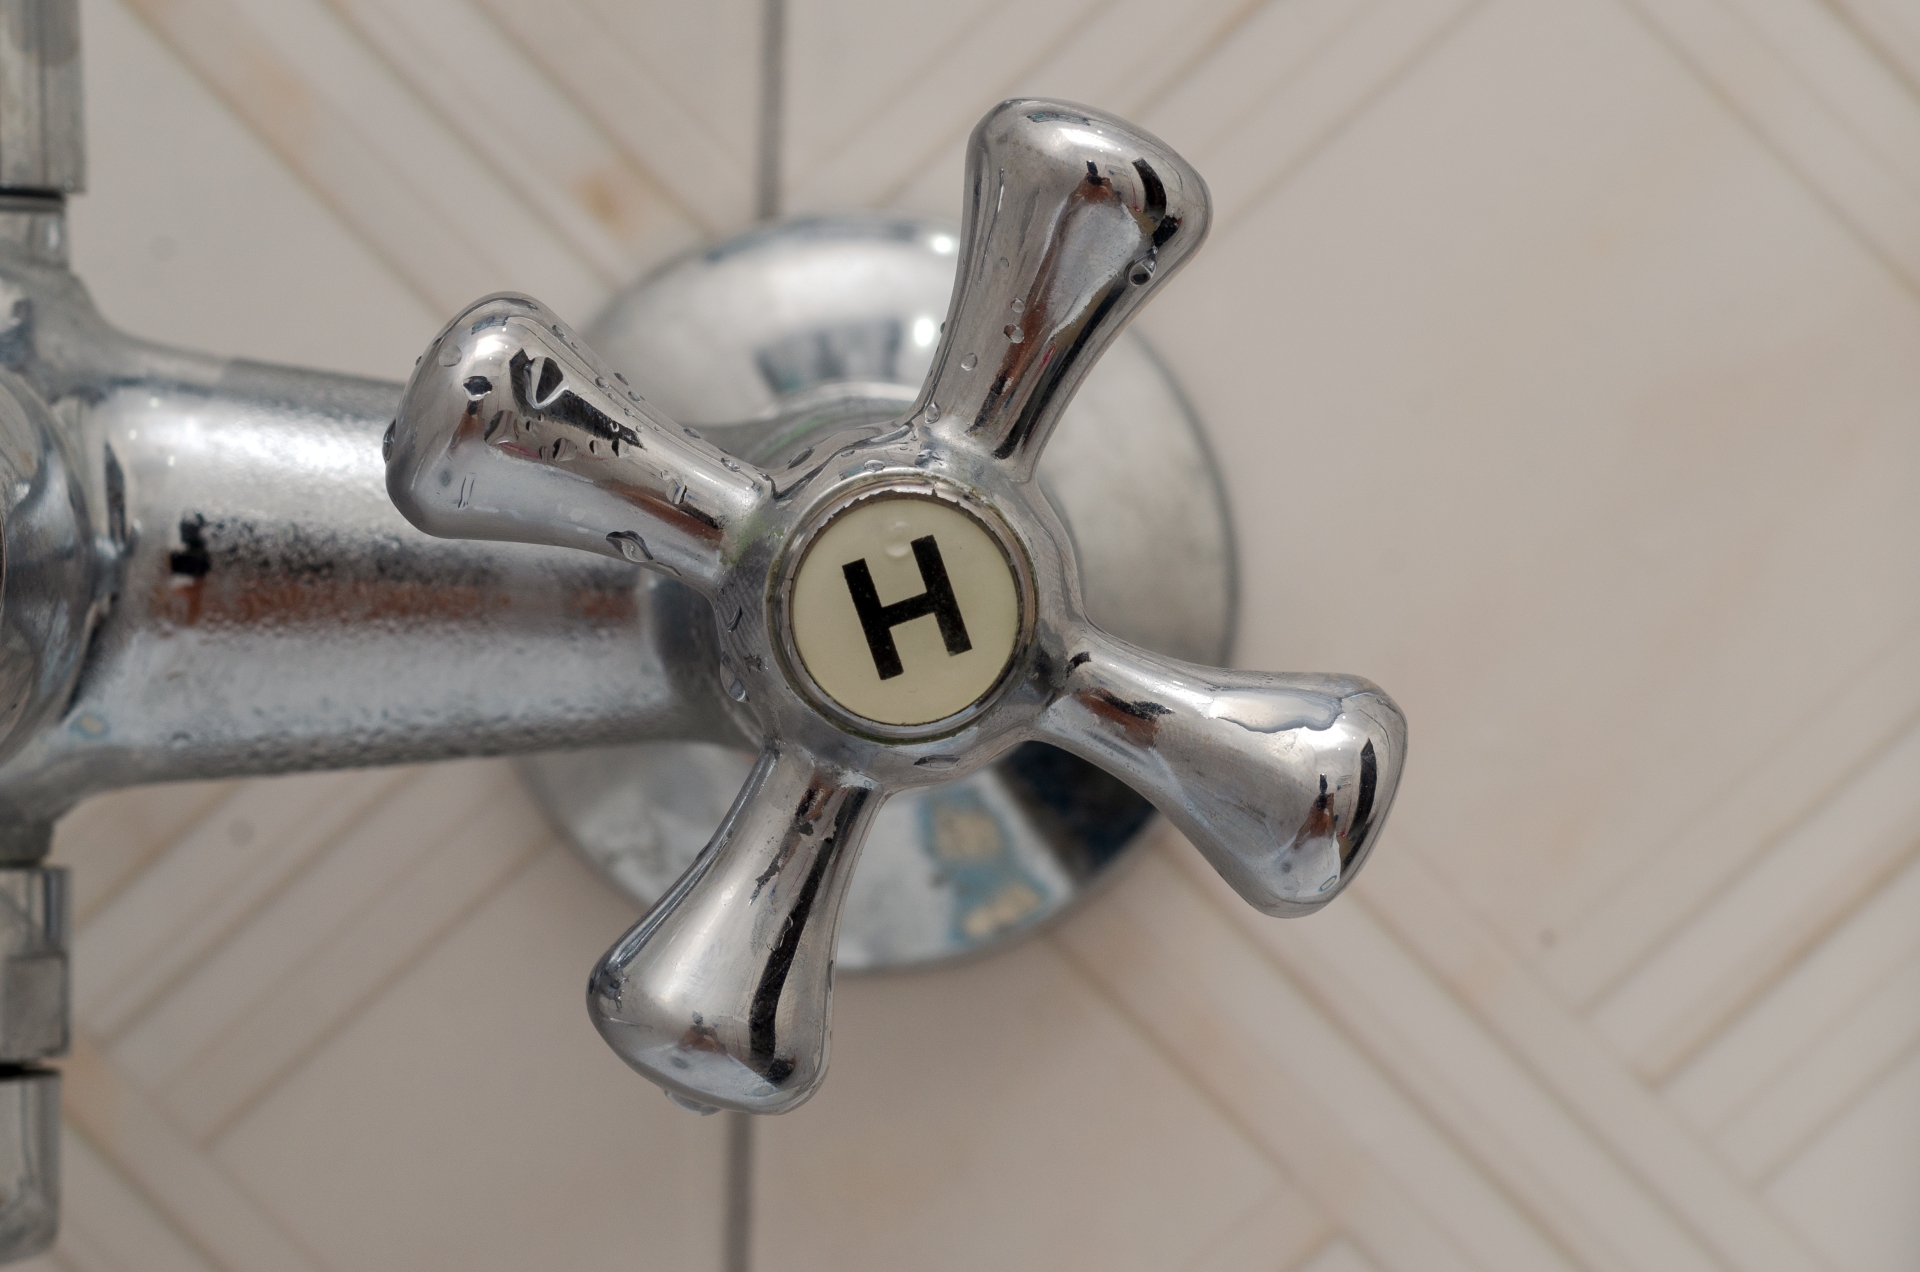 hot water tap in bathroom